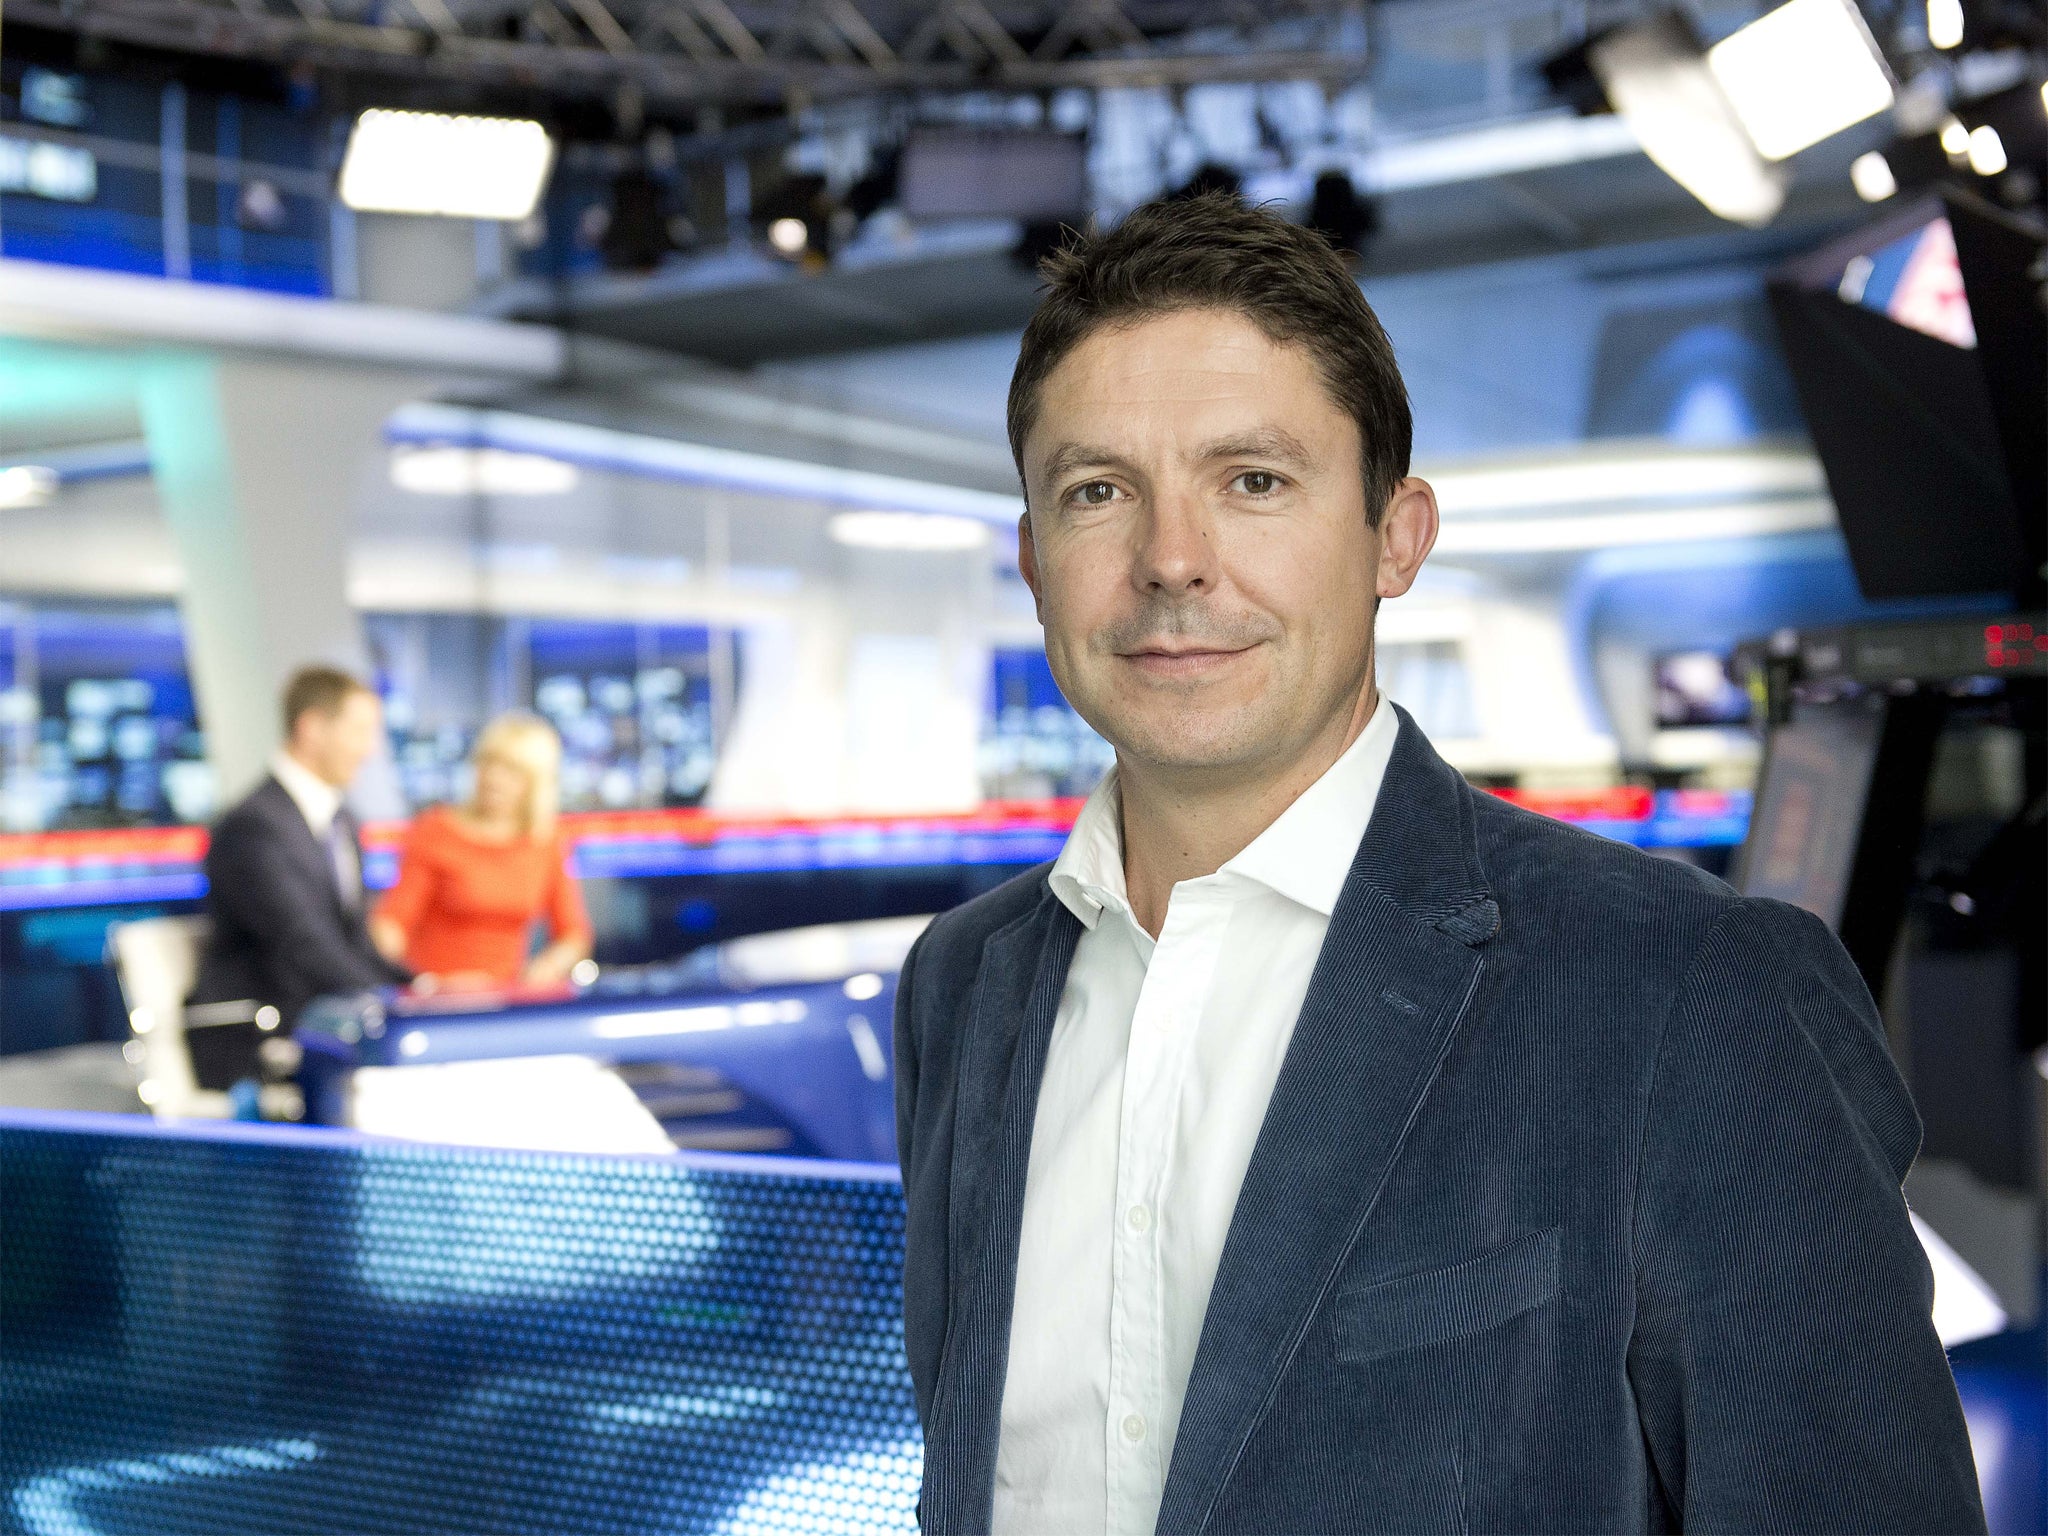 Sky Sports managing director Barney Francis down on the studio floor